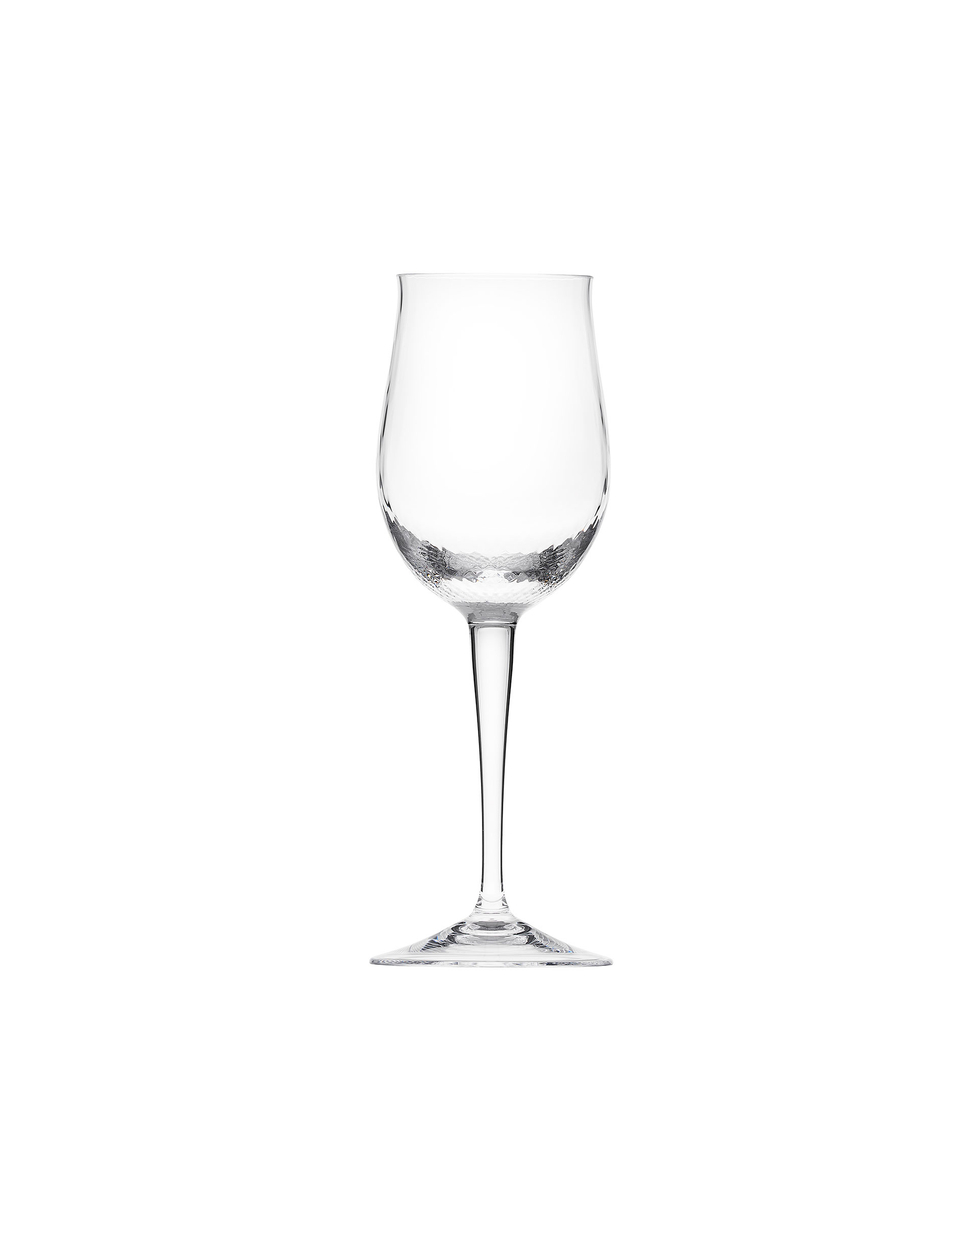 Wellenspiel wine glass, 290 ml